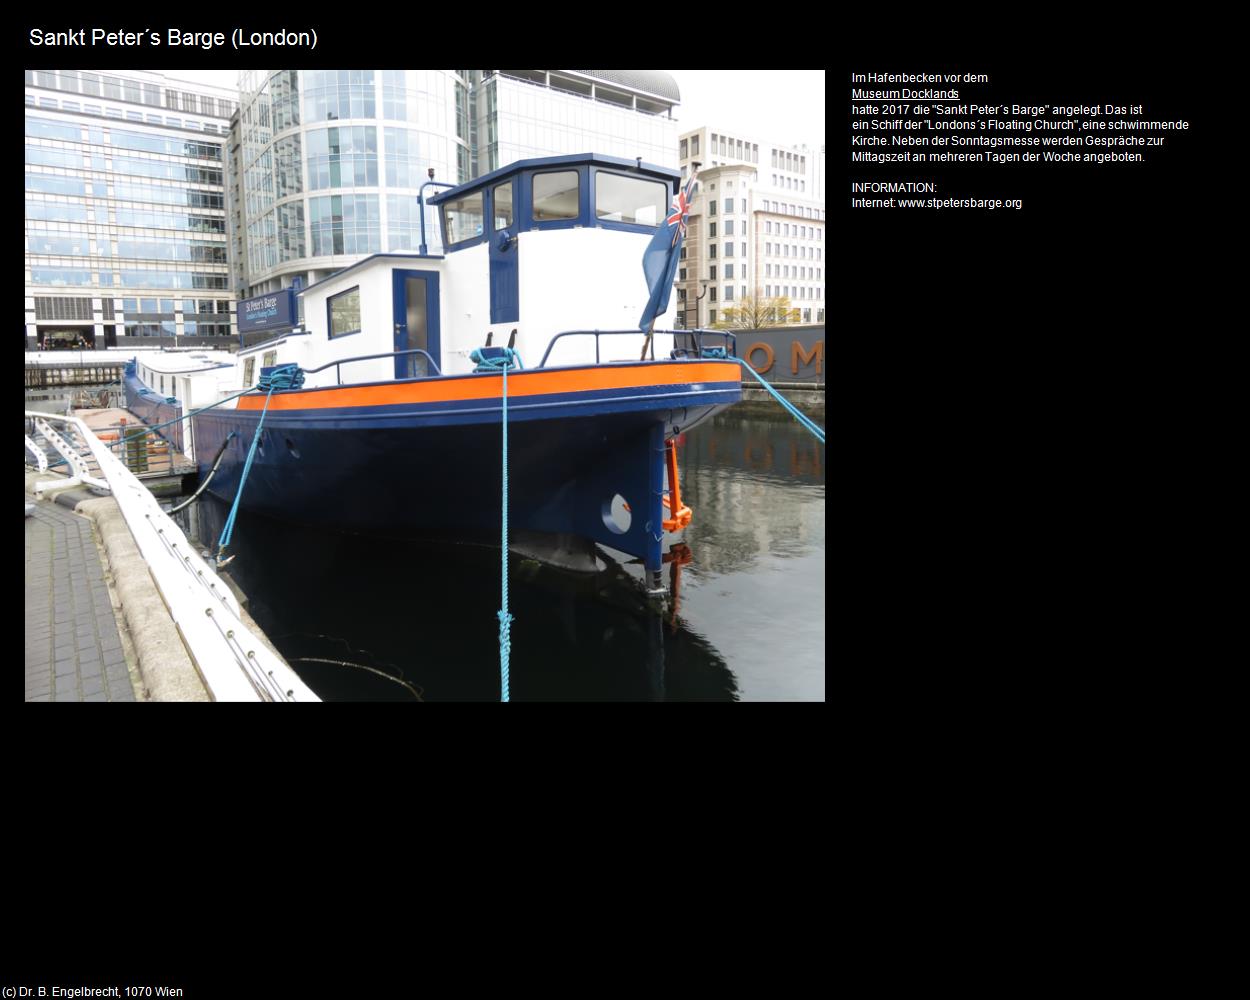 Sankt Peter‘s Barge (Tower Hamlets) (London, England) in Kulturatlas-ENGLAND und WALES(c)B.Engelbrecht